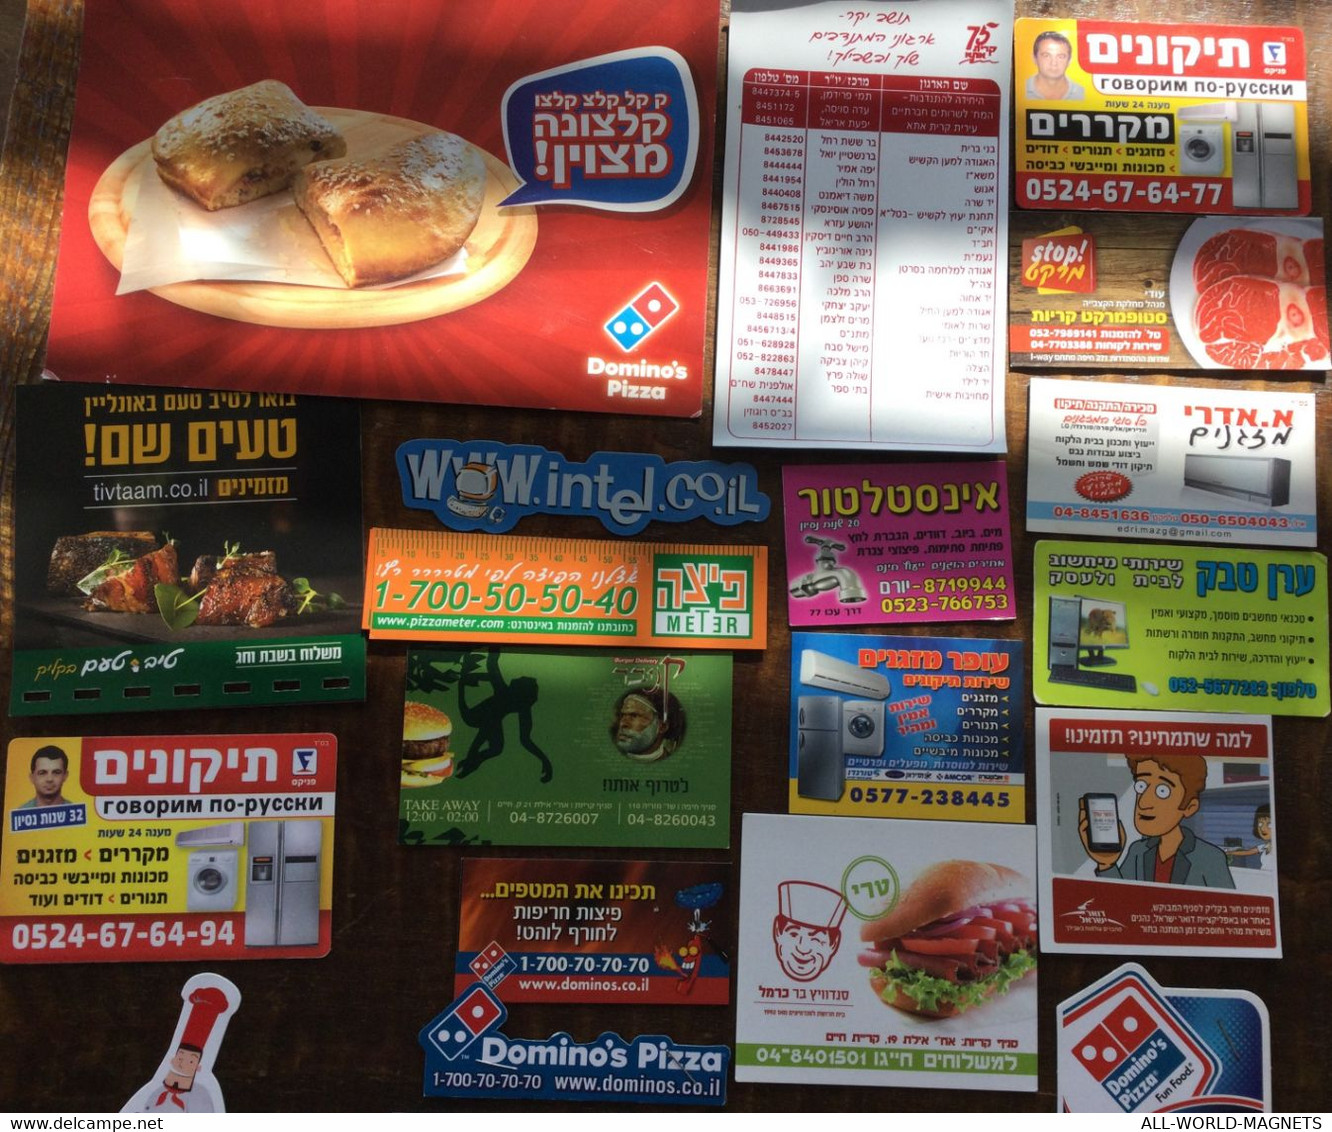 Lot of 20 Israeli Advertising Fidge Magnets: Food, Plumber, Computing & Post office services